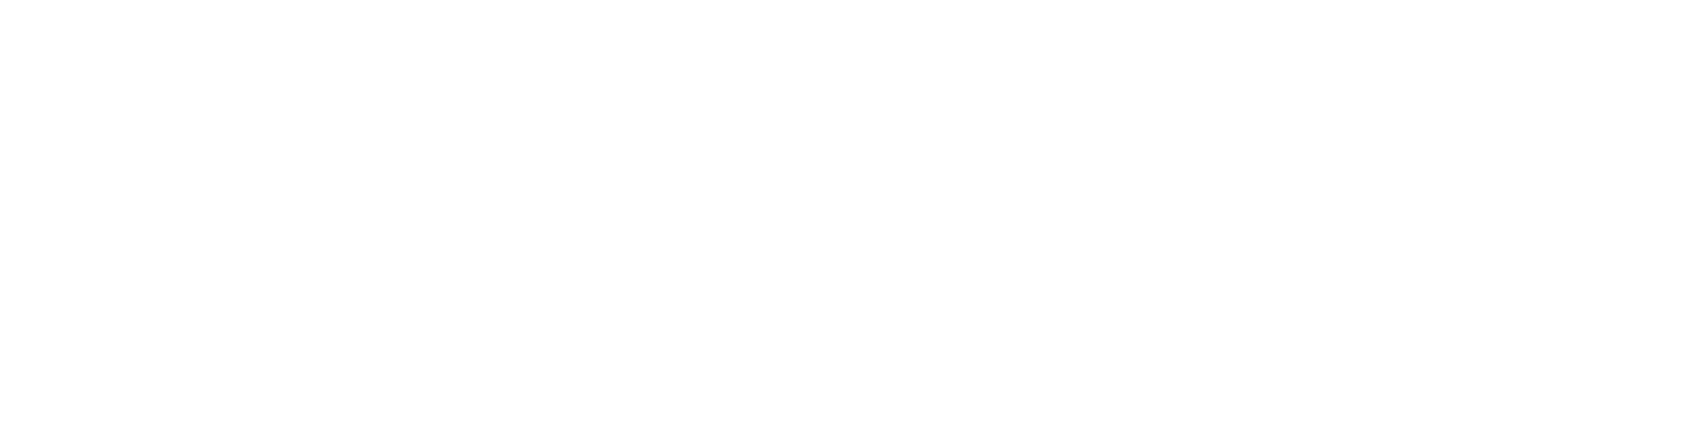 Barneys Newyork Logo White